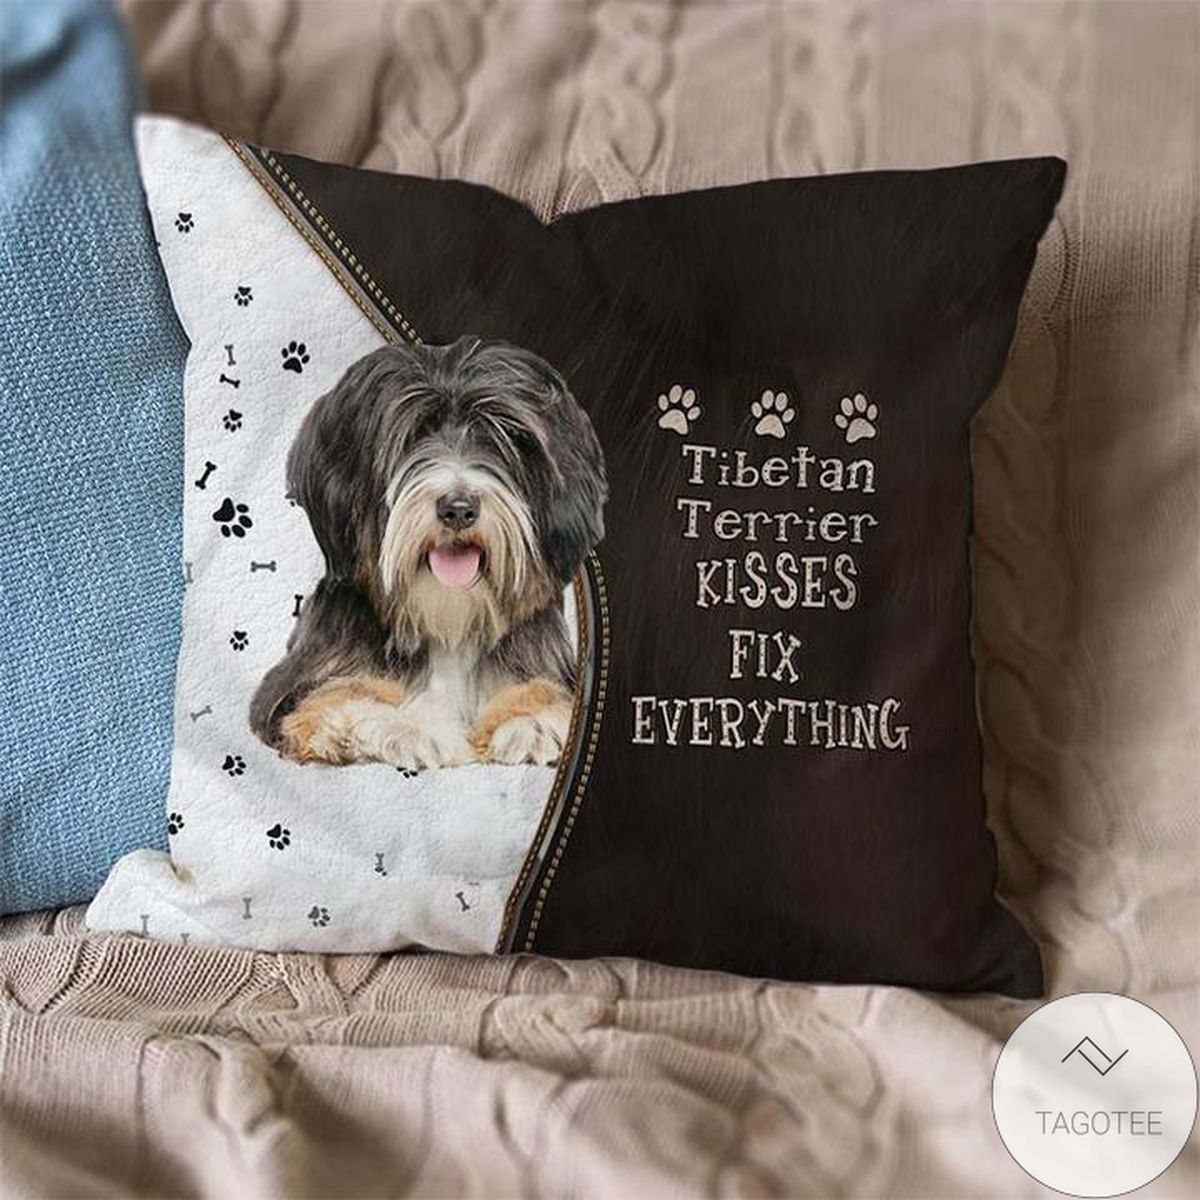 Tibetan Terrier Kisses Fix Everything Pillowcase